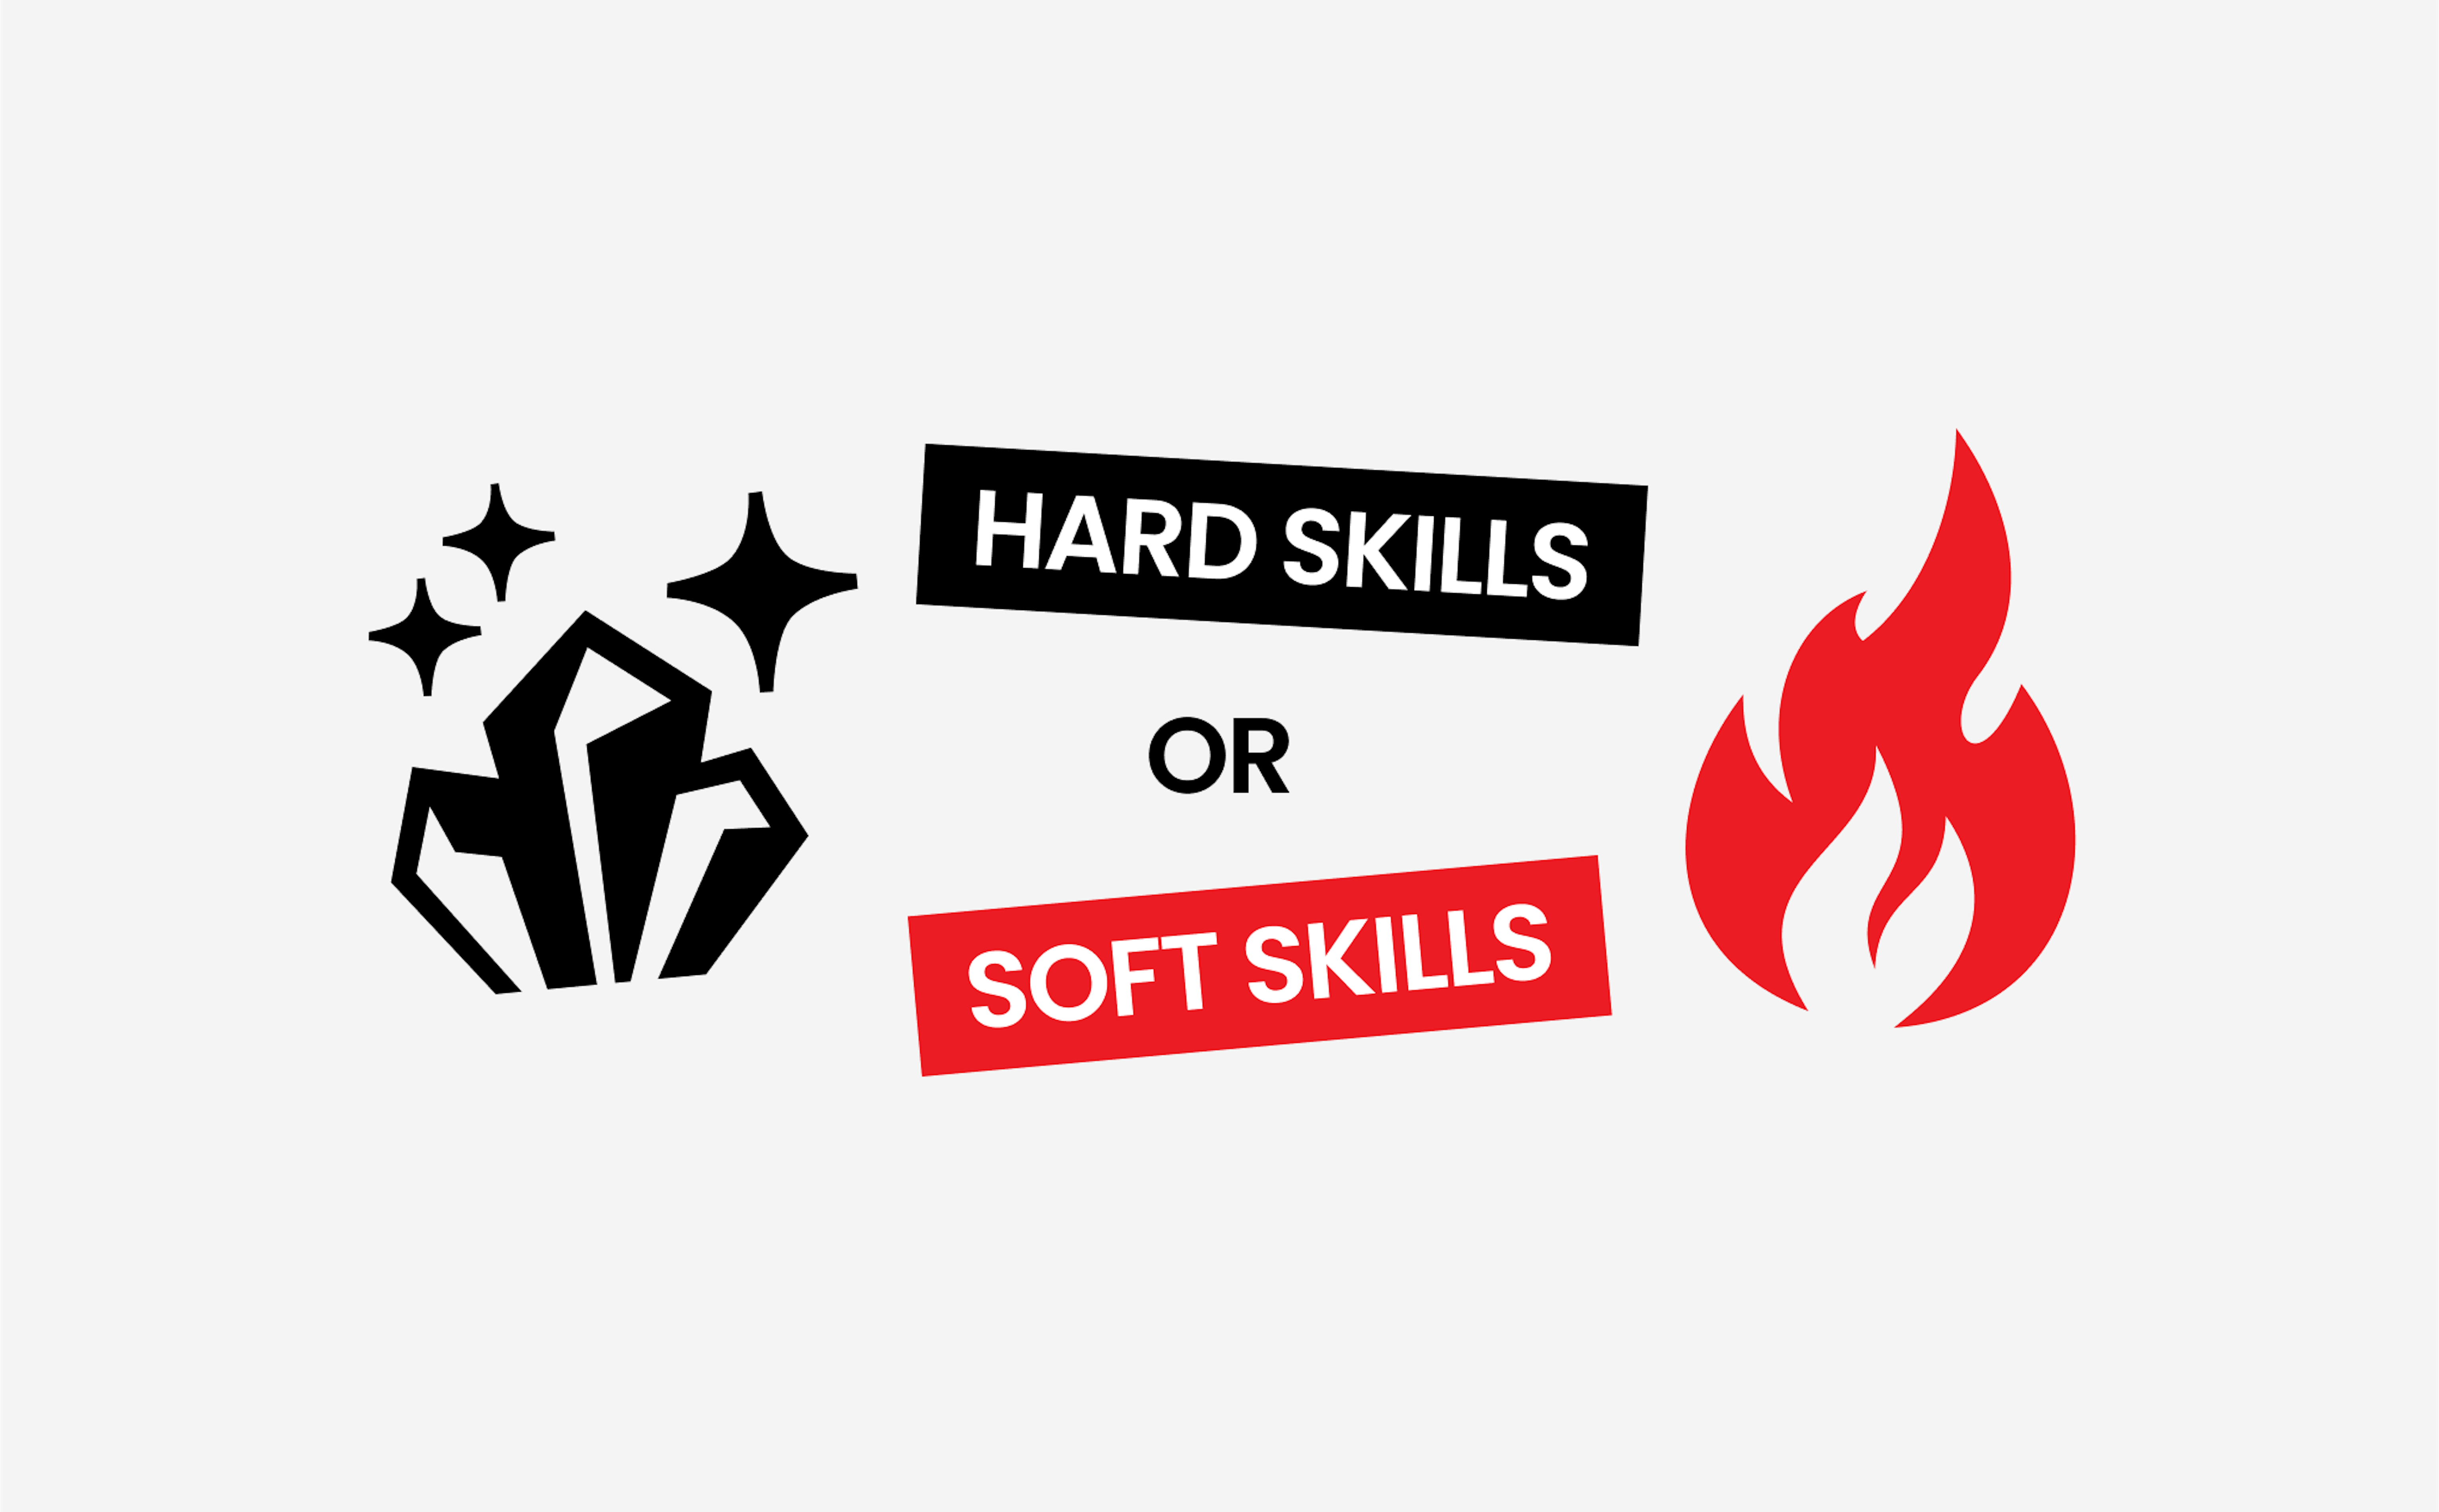 Software developer's hard and soft skills